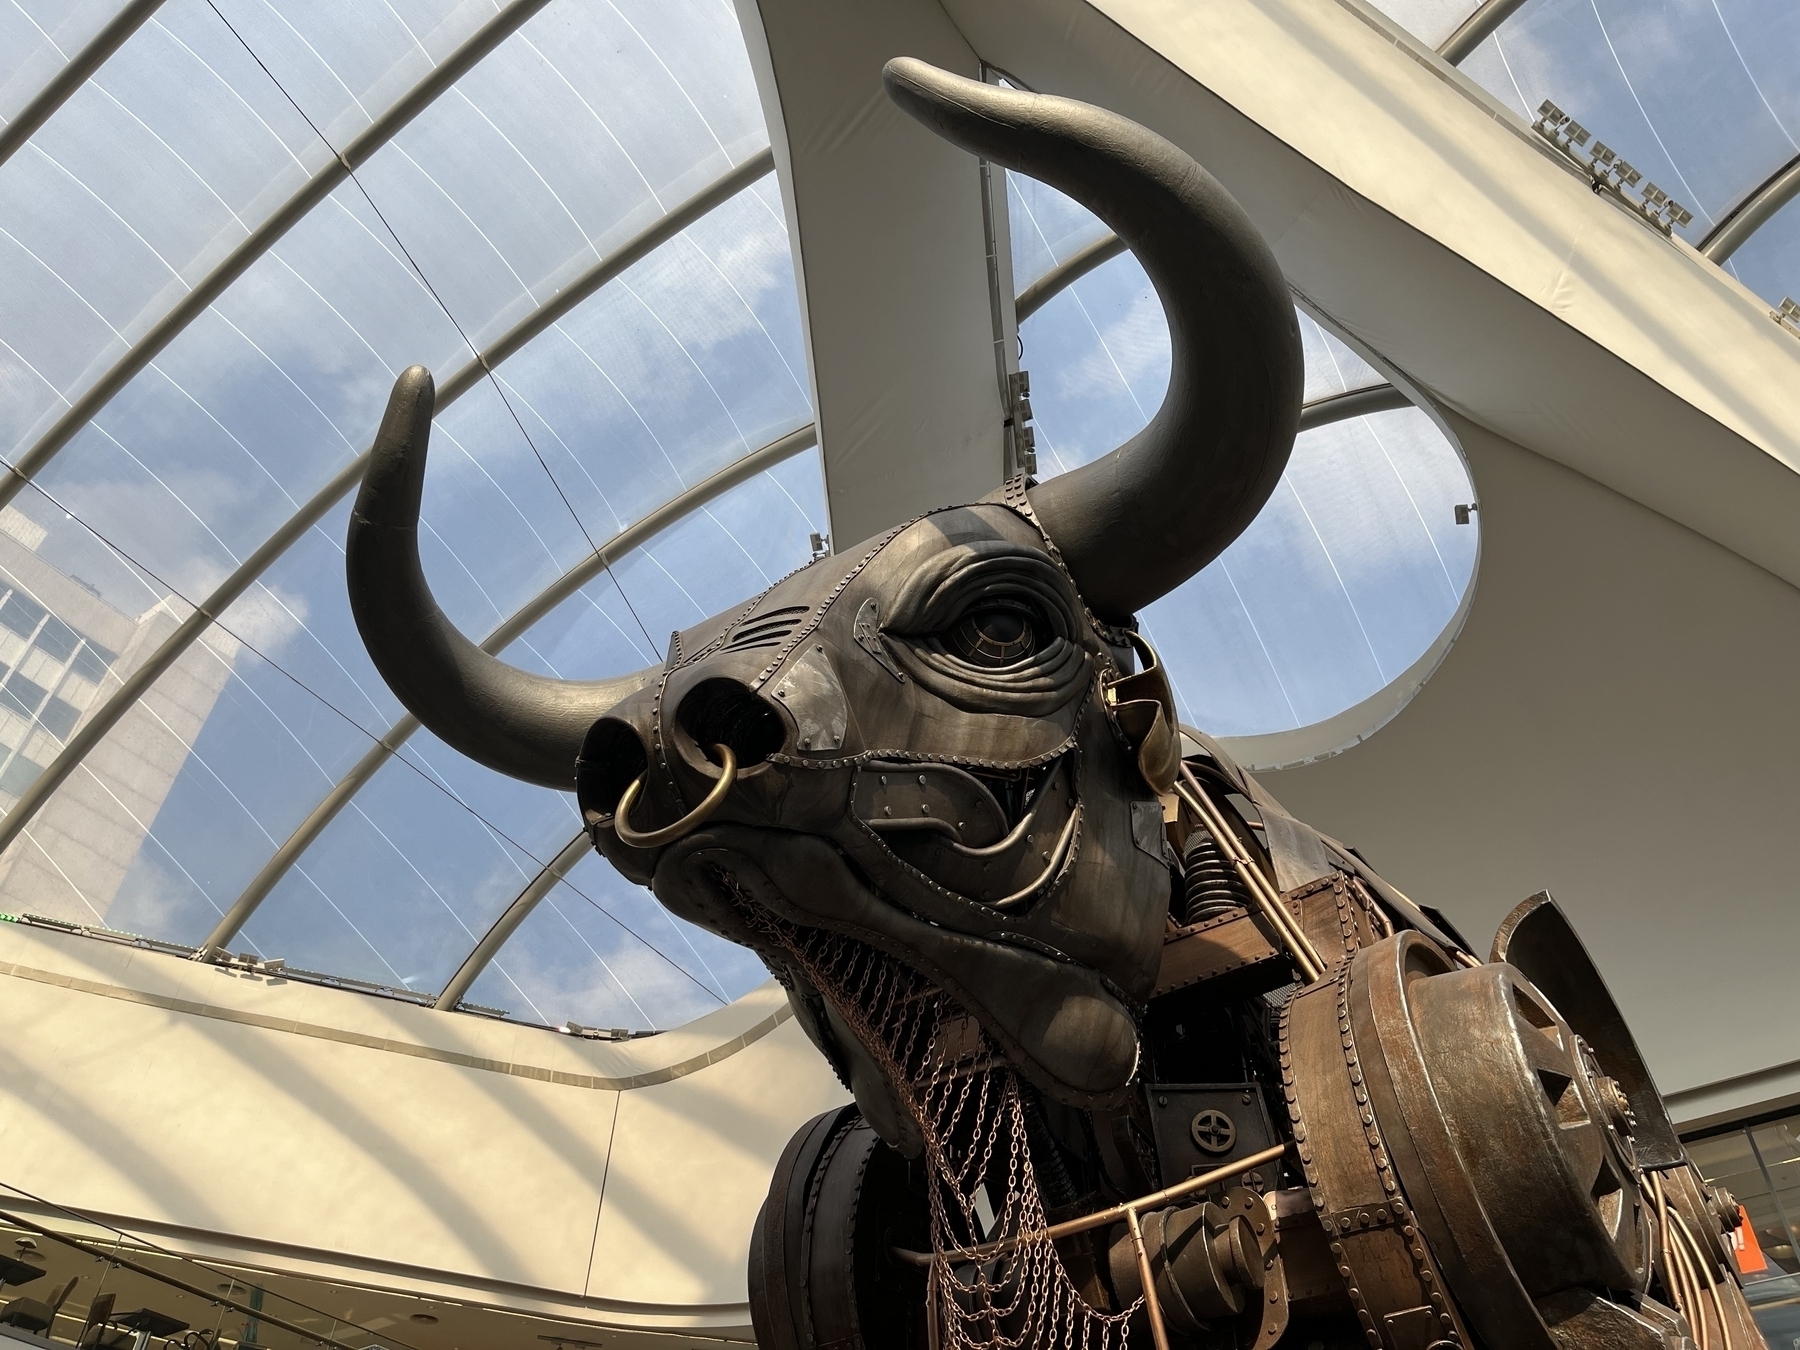 The head of a huge, steel mechanical bull